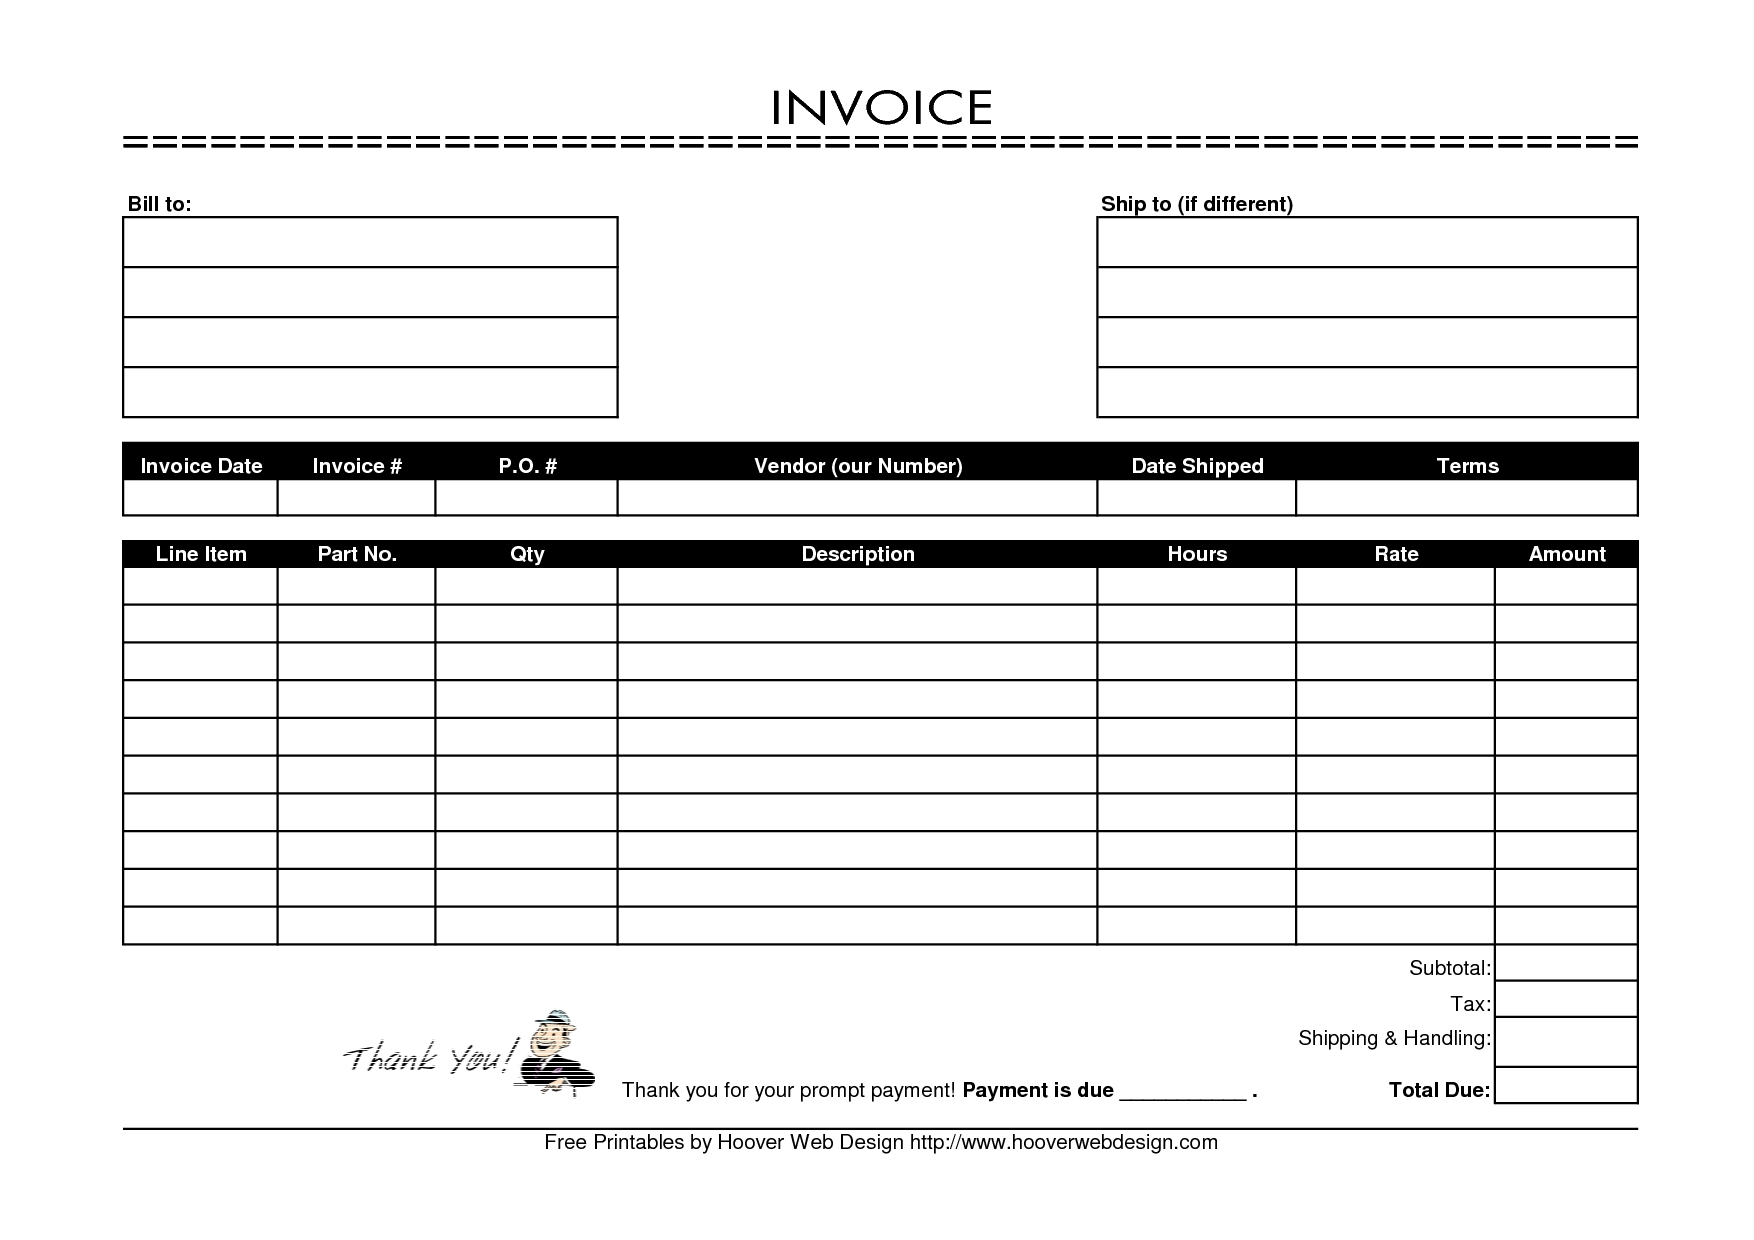 free printable invoice invoice templat free invoice software free printable invoice forms billing